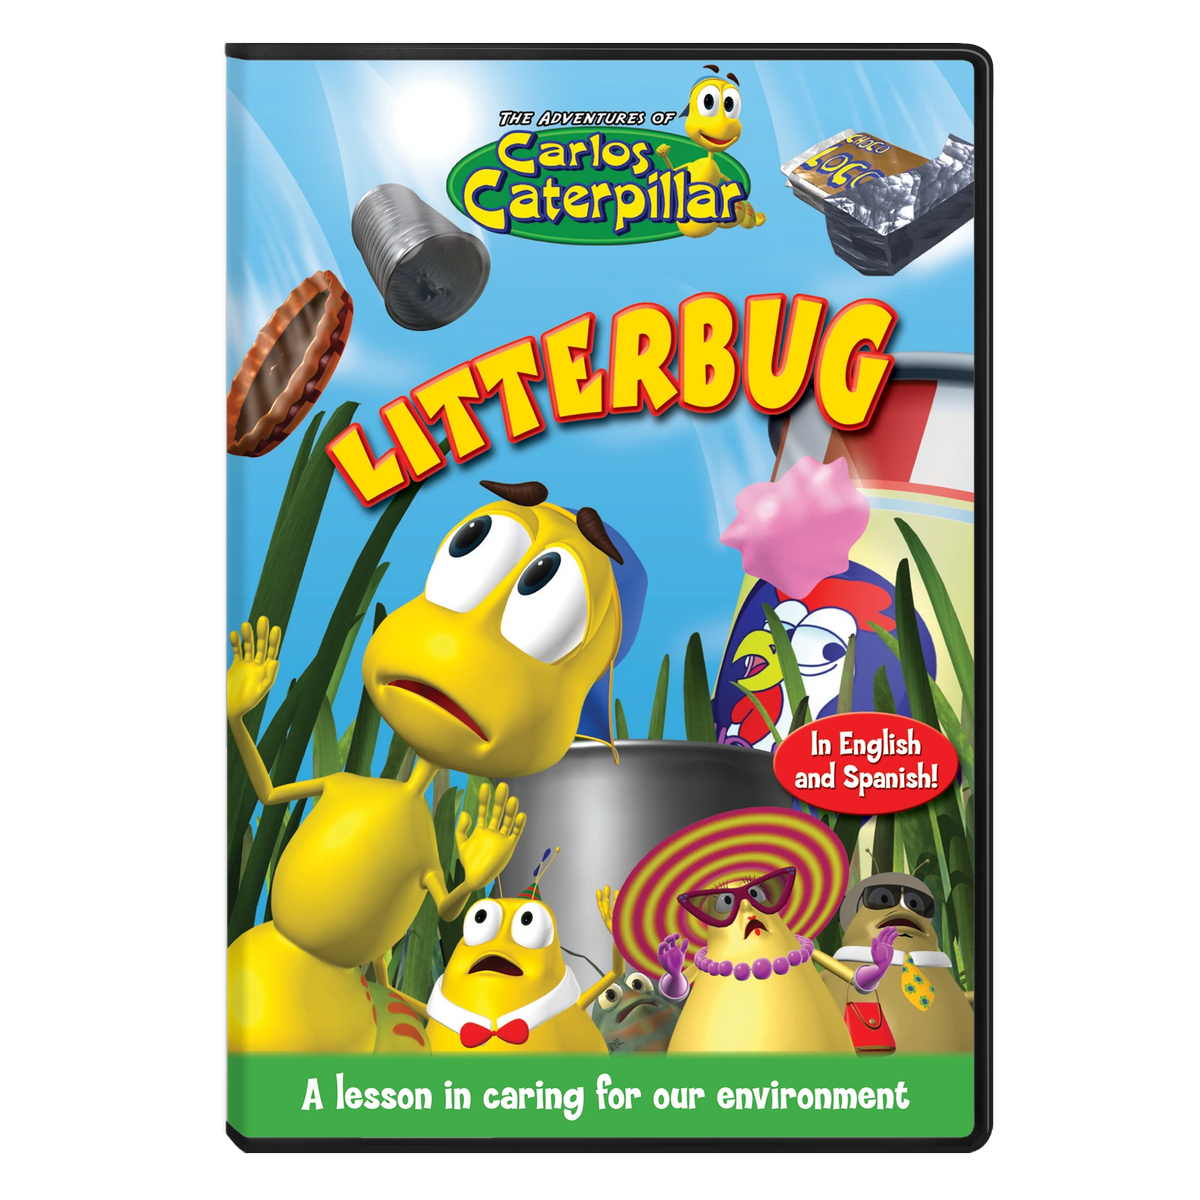 Carlos Caterpillar DVD - Ep.04: Litterbug